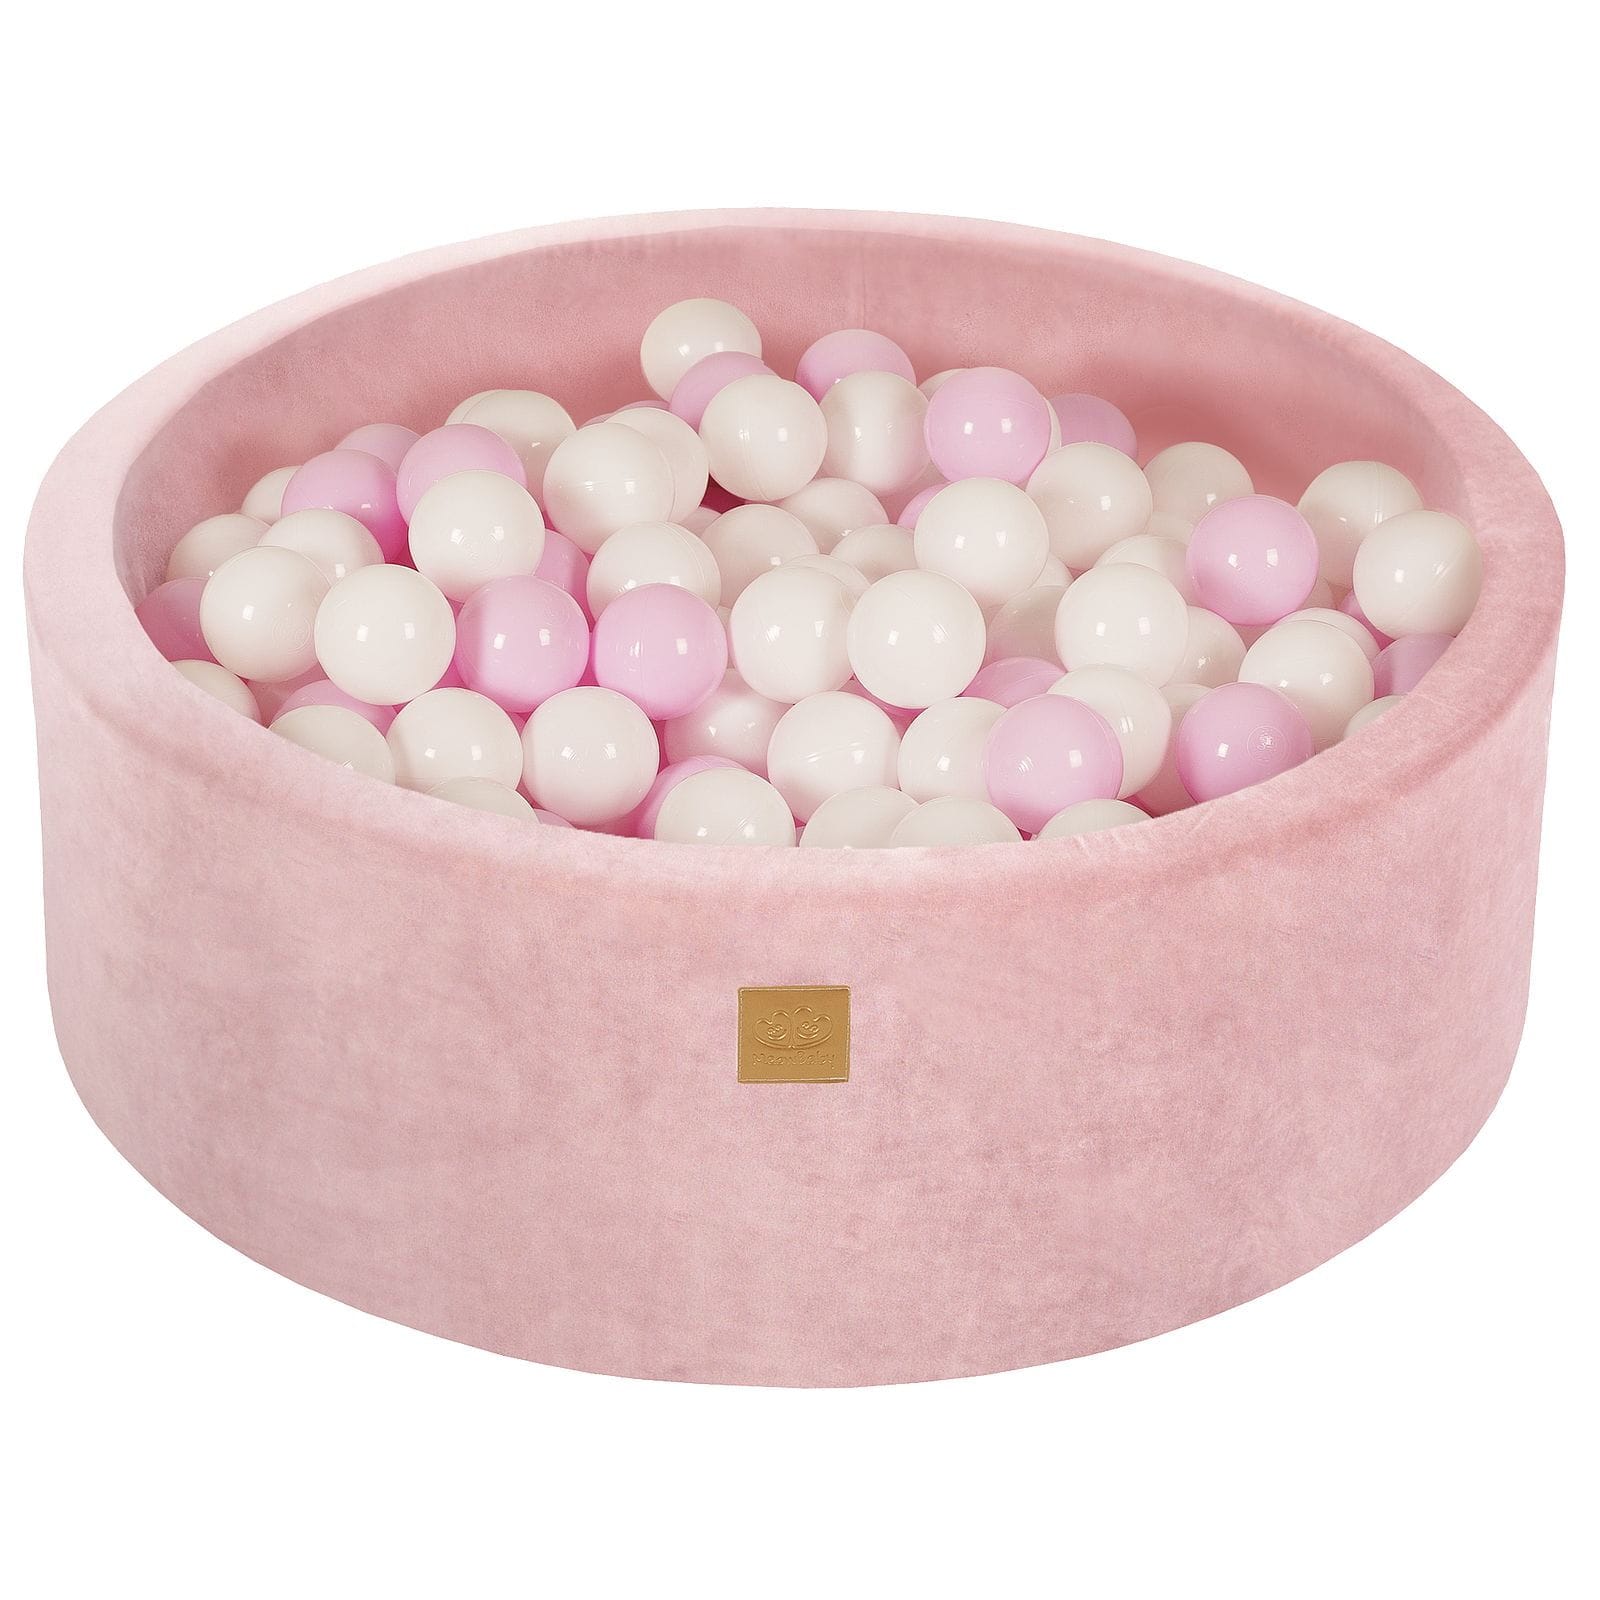 Velvet Round Foam Ball Pit with 200 Balls - Pastel Pink